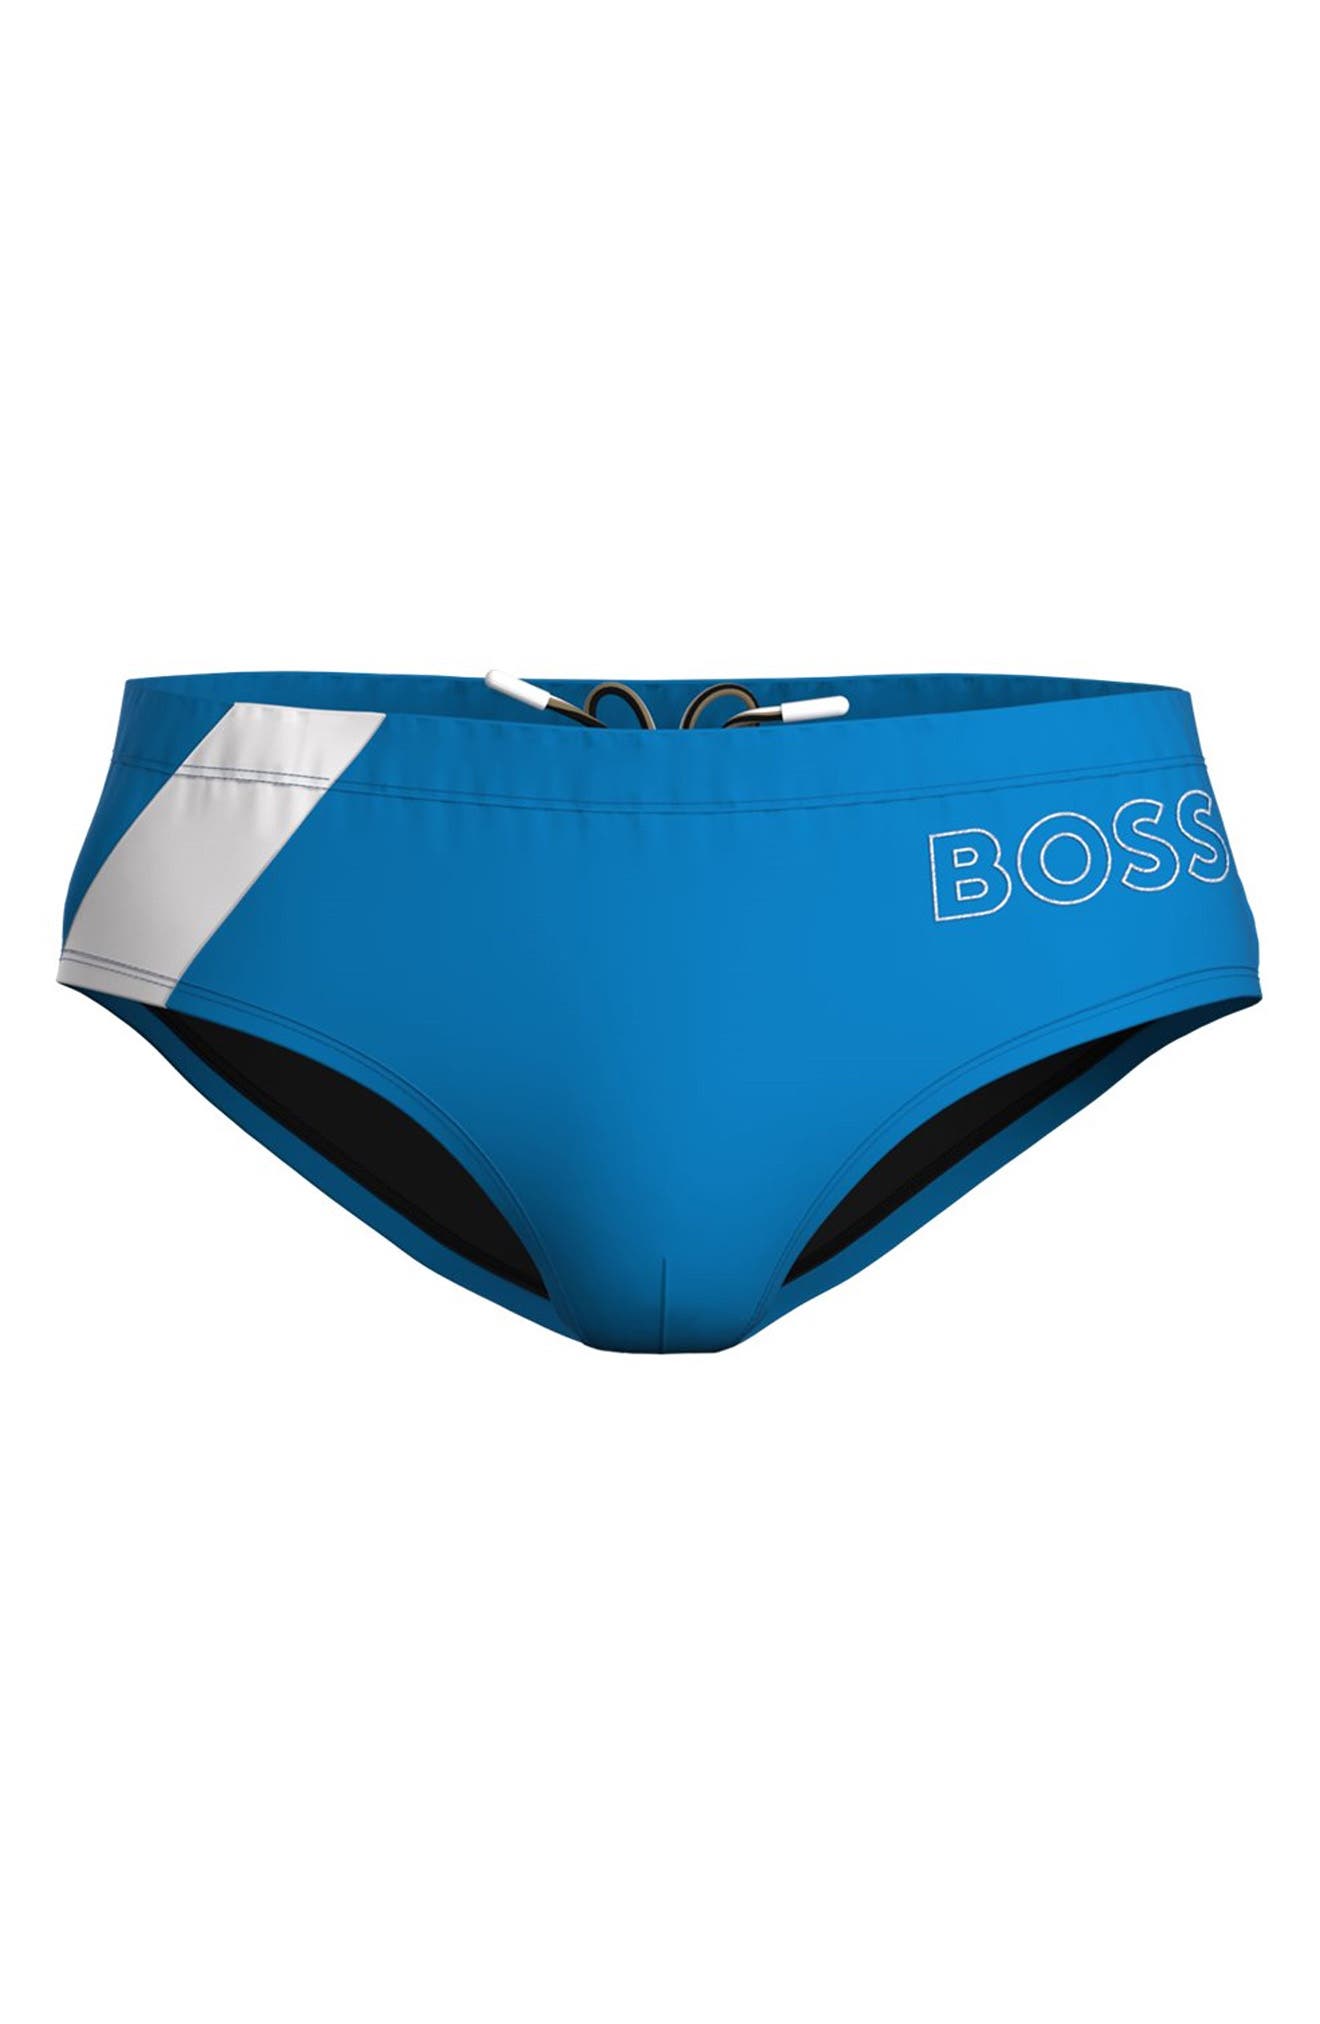 BOSS Jersey Swim Briefs in Bright Blue